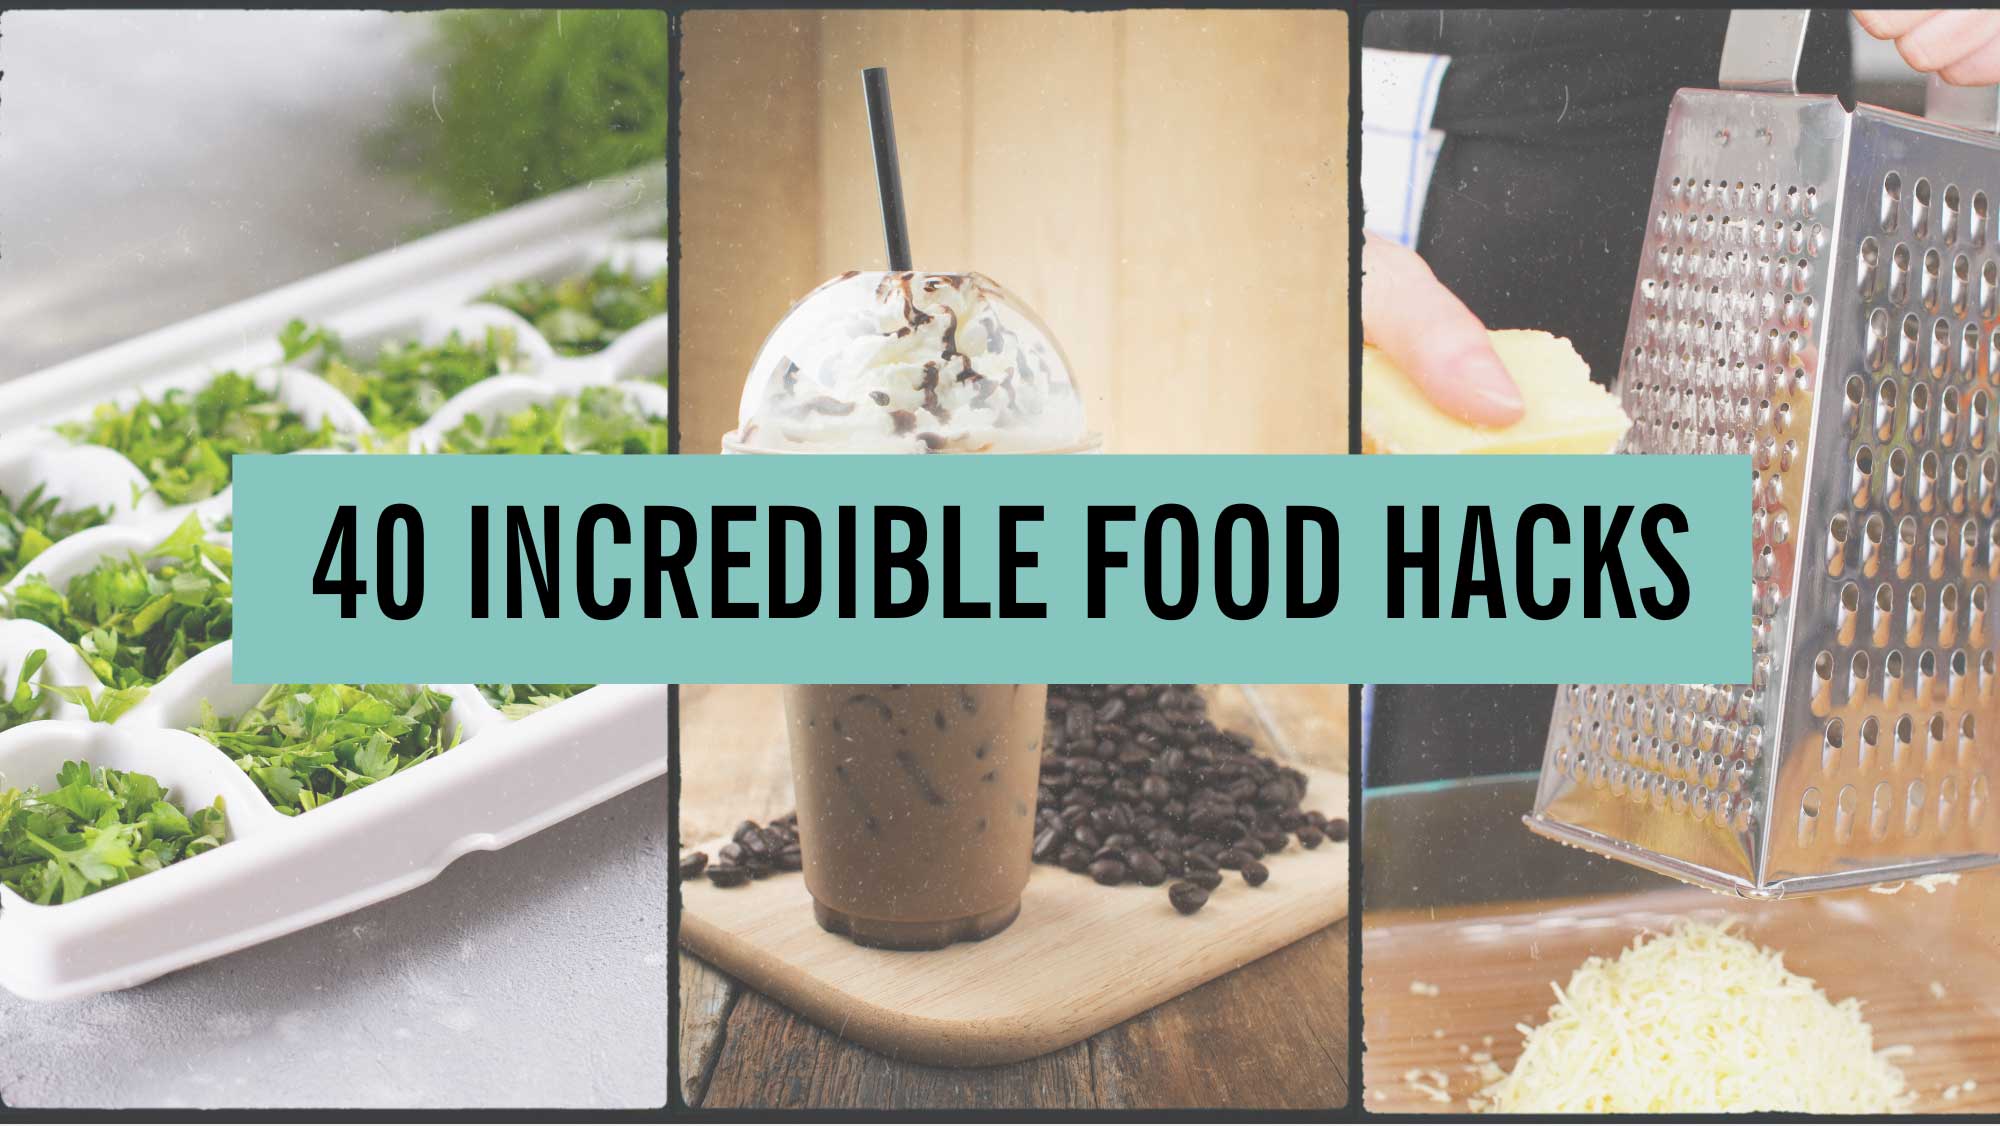 15 Genius Kitchen Hacks to Make Healthy Cooking Easier